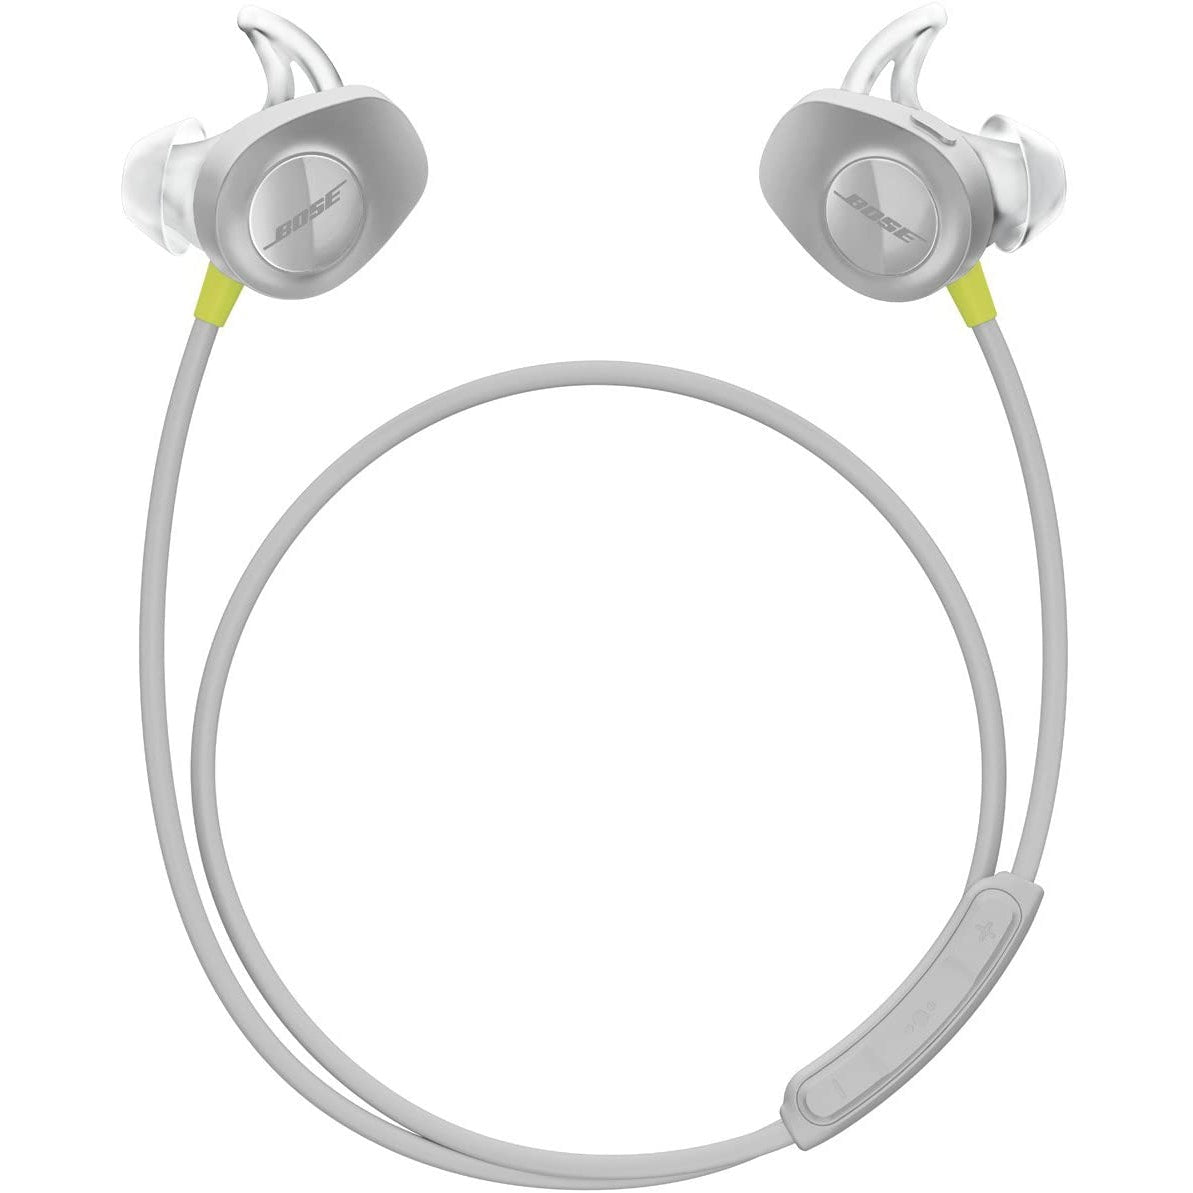 Bose AI1 SoundSport Wireless Earphones, Grey and Yellow